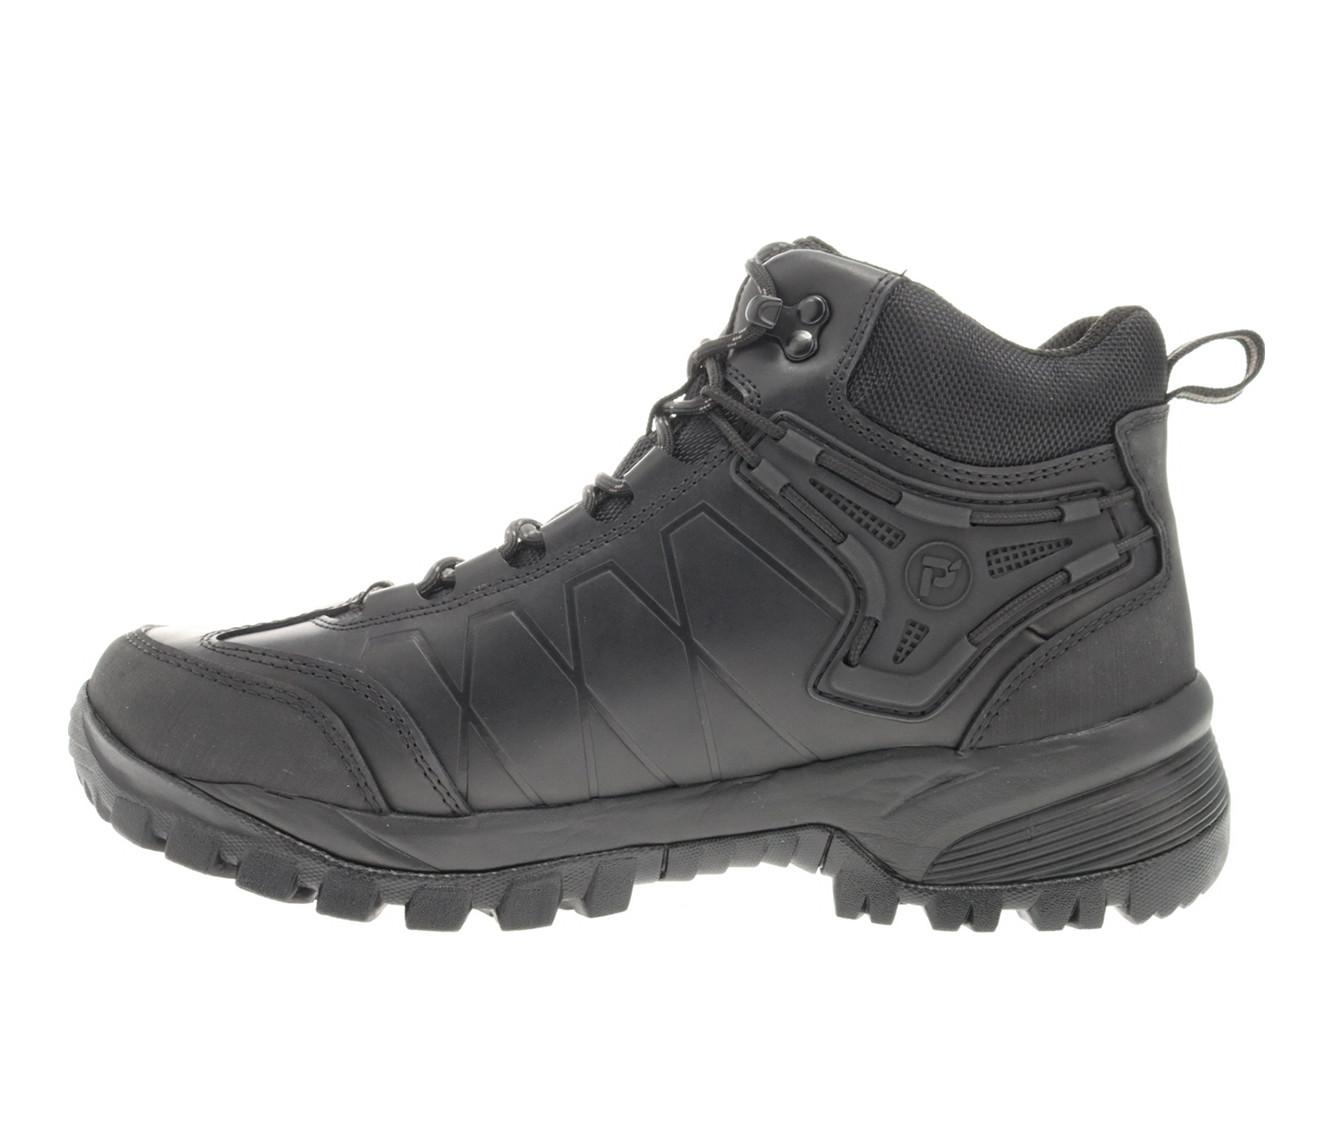 Men's Propet Ridge Walker Force Waterproof Hiking Boots